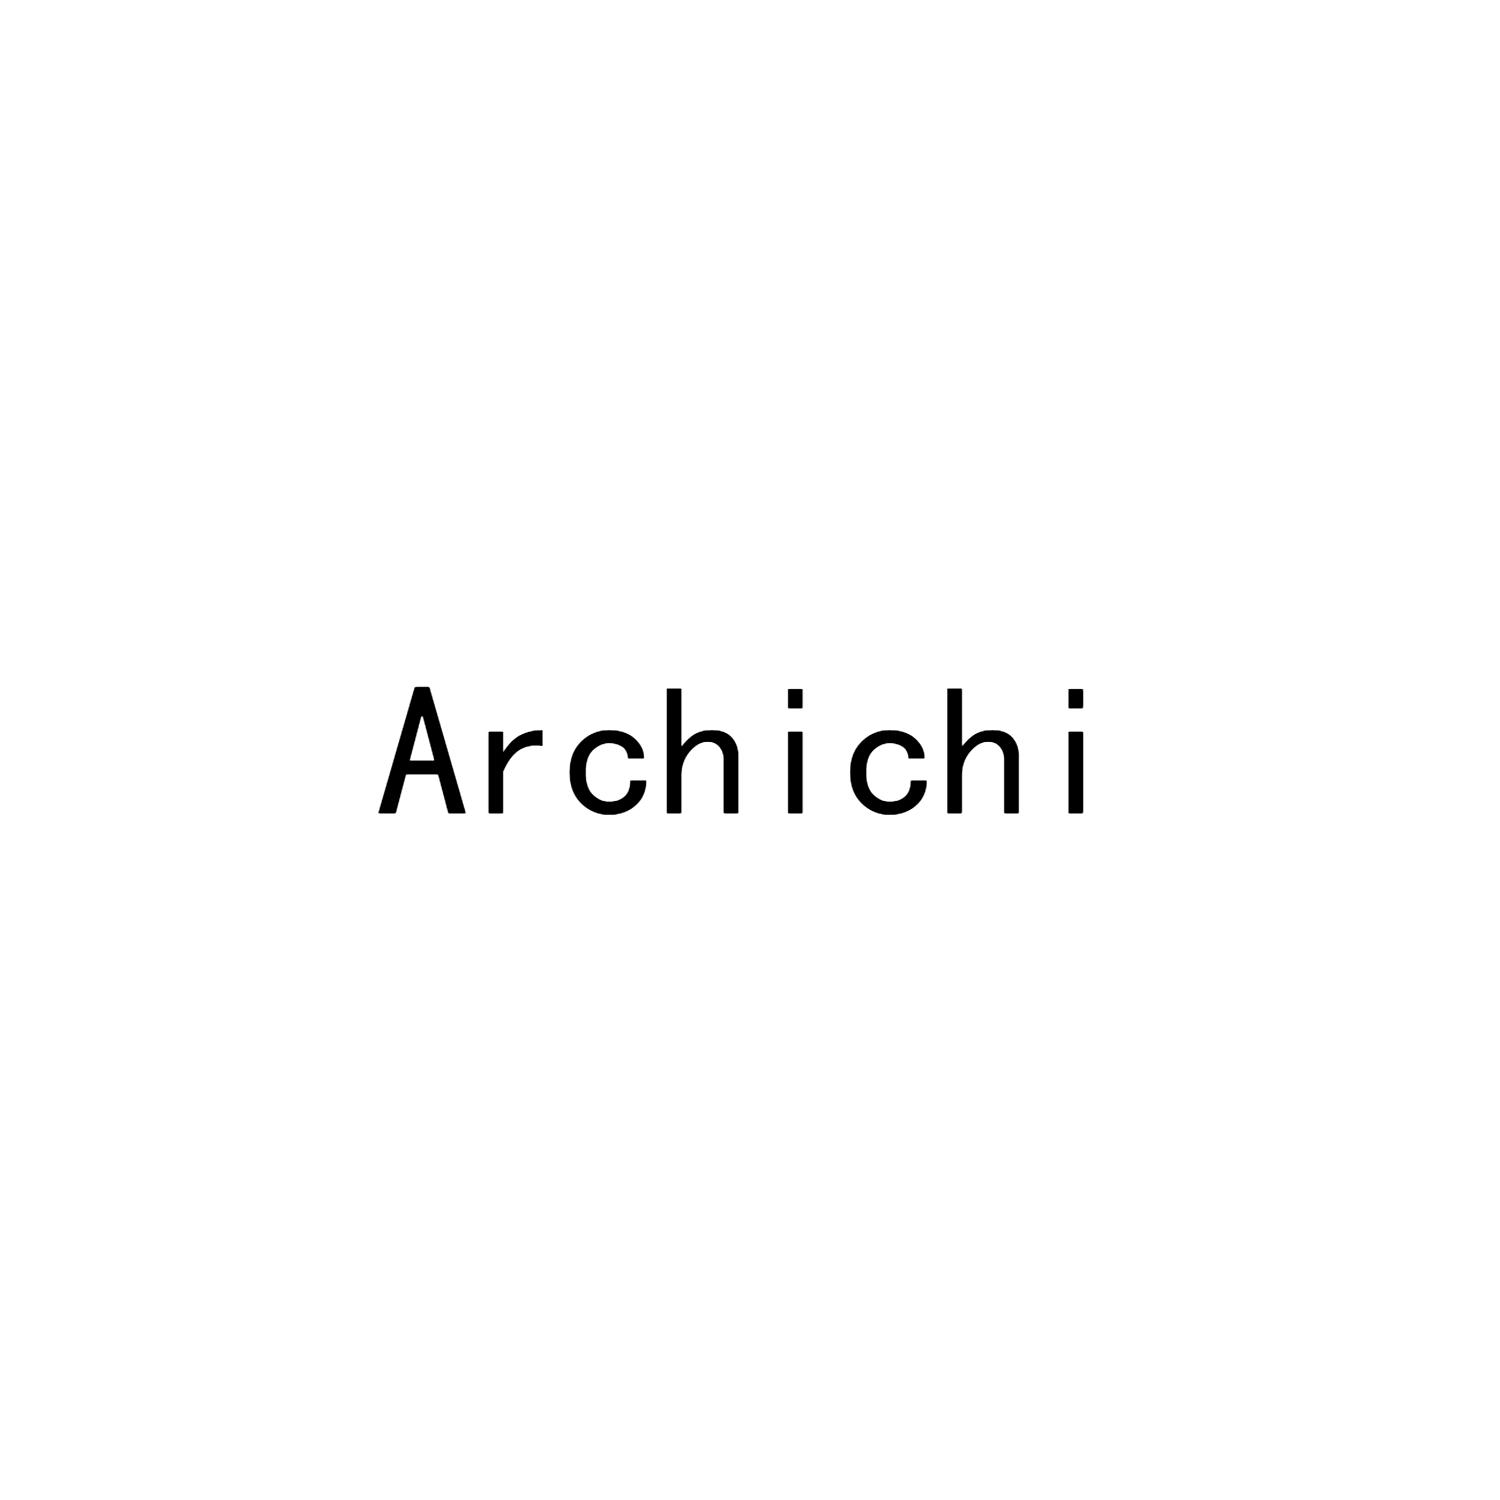 29类-食品ARCHICHI商标转让